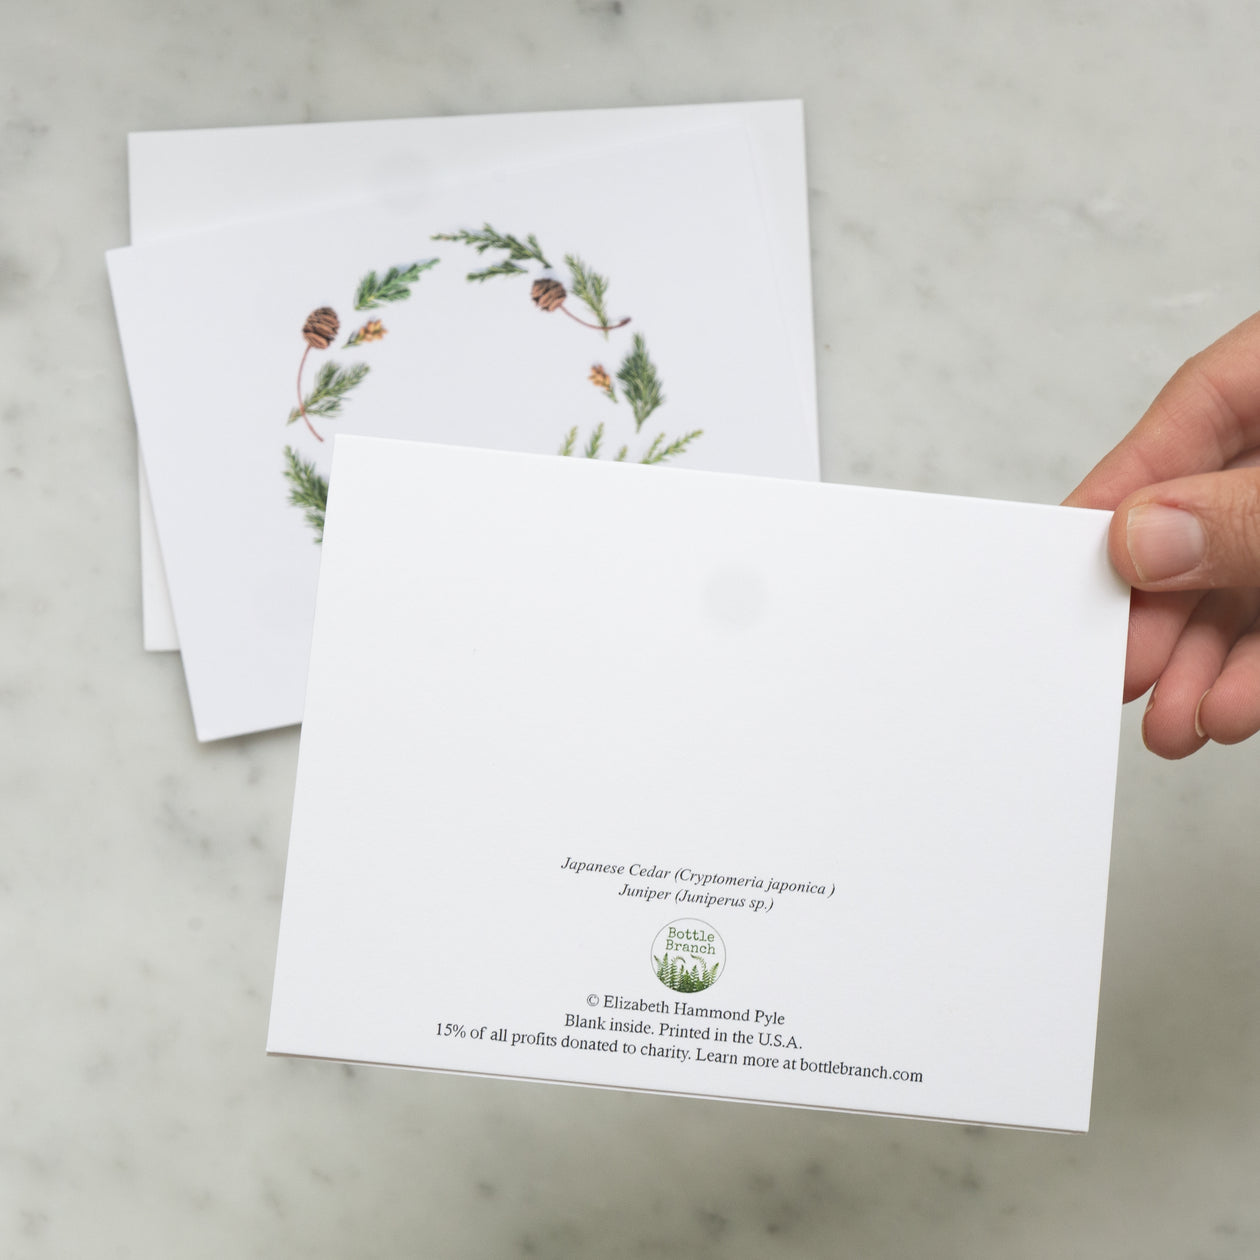 Folding card - Evergreen Wreath